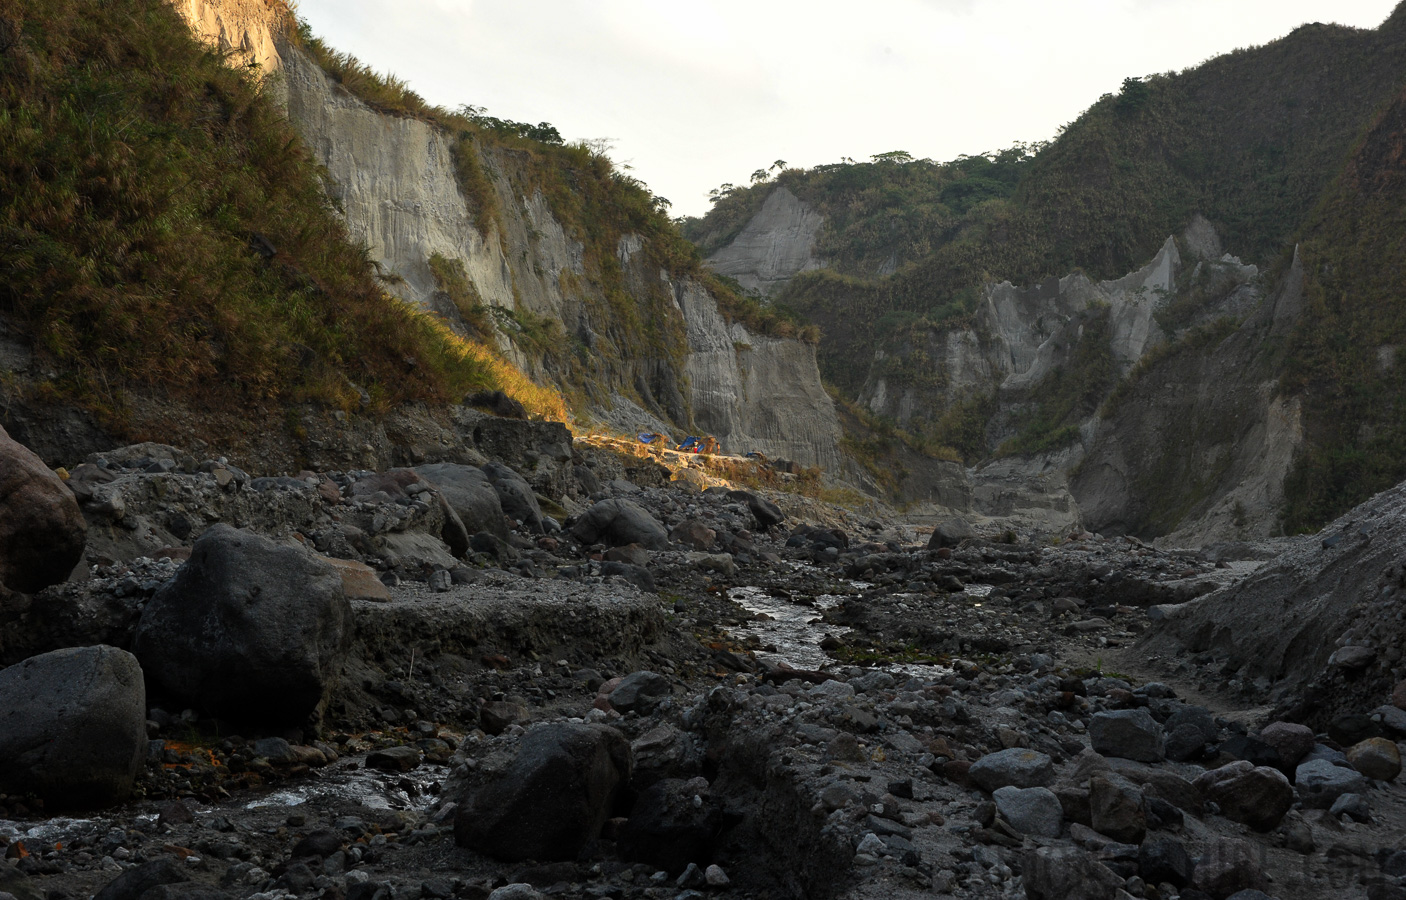 Mount Pinatubo [72 mm, 1/250 sec at f / 13, ISO 1600]